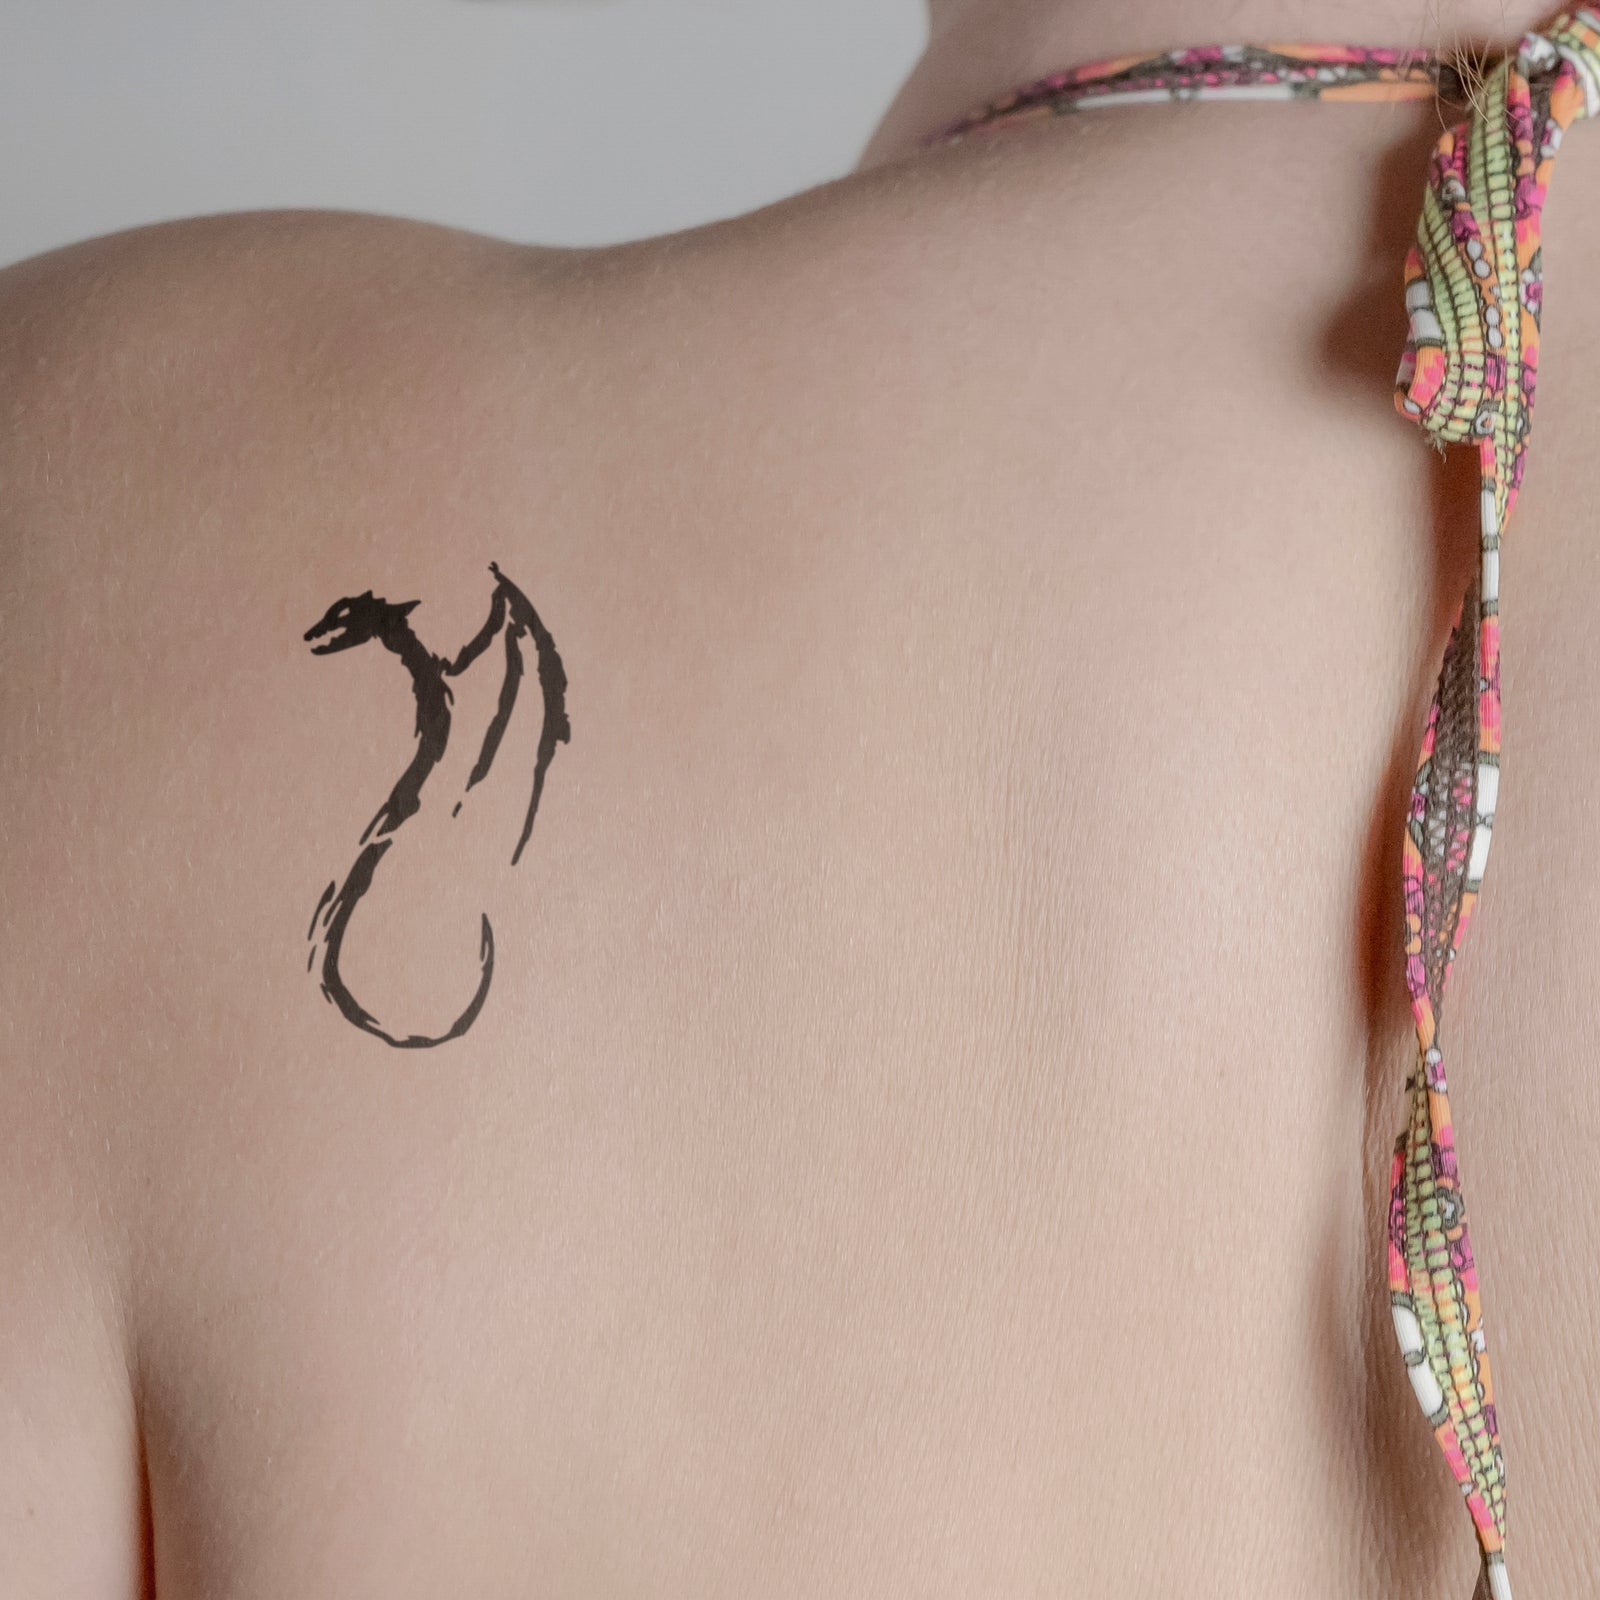 Abstract dragon | Temporary tattoos - minink